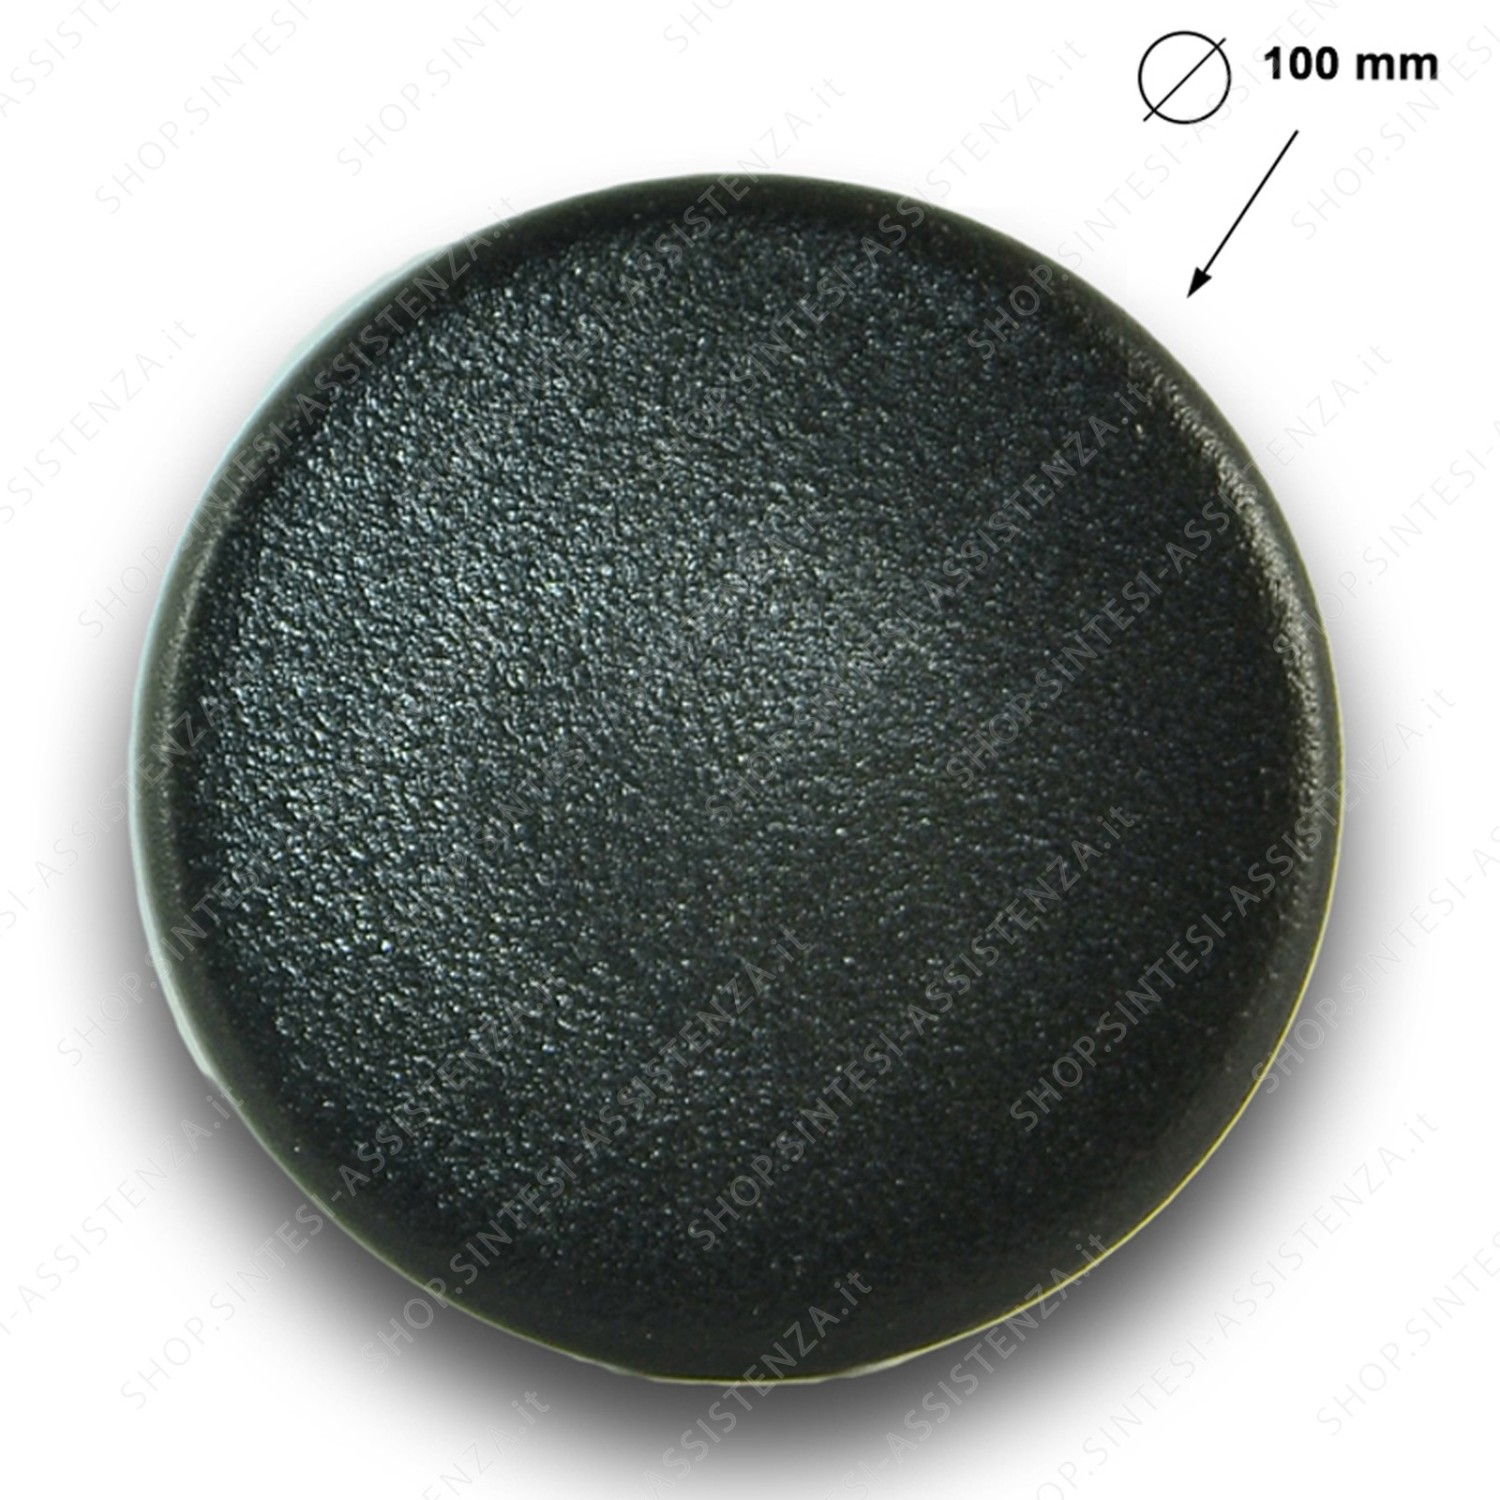 BURNER PLATE CAP SABAF FRANKE FOSTER RAPID HOB DIAMETER 10 cm CRYSTAL SERIES - 9601426